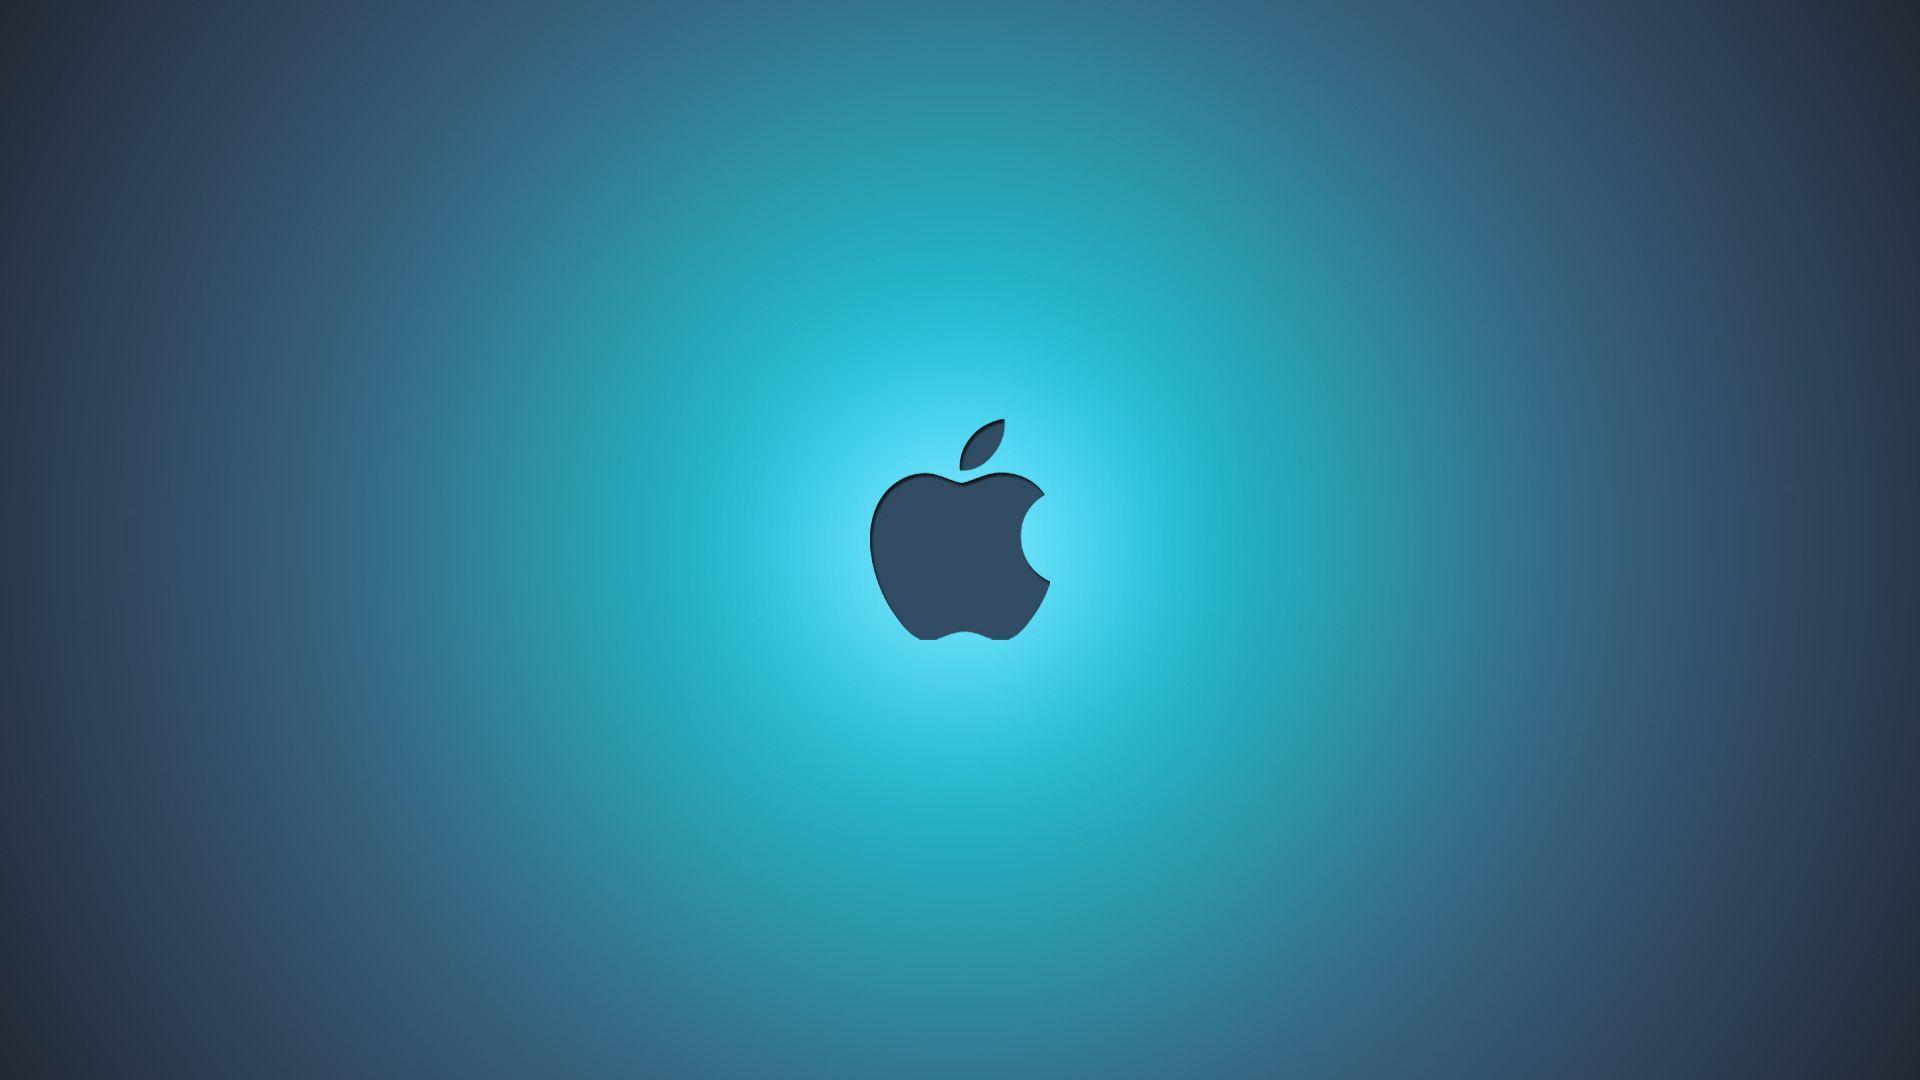 Hd Apple Wallpaper For Mac